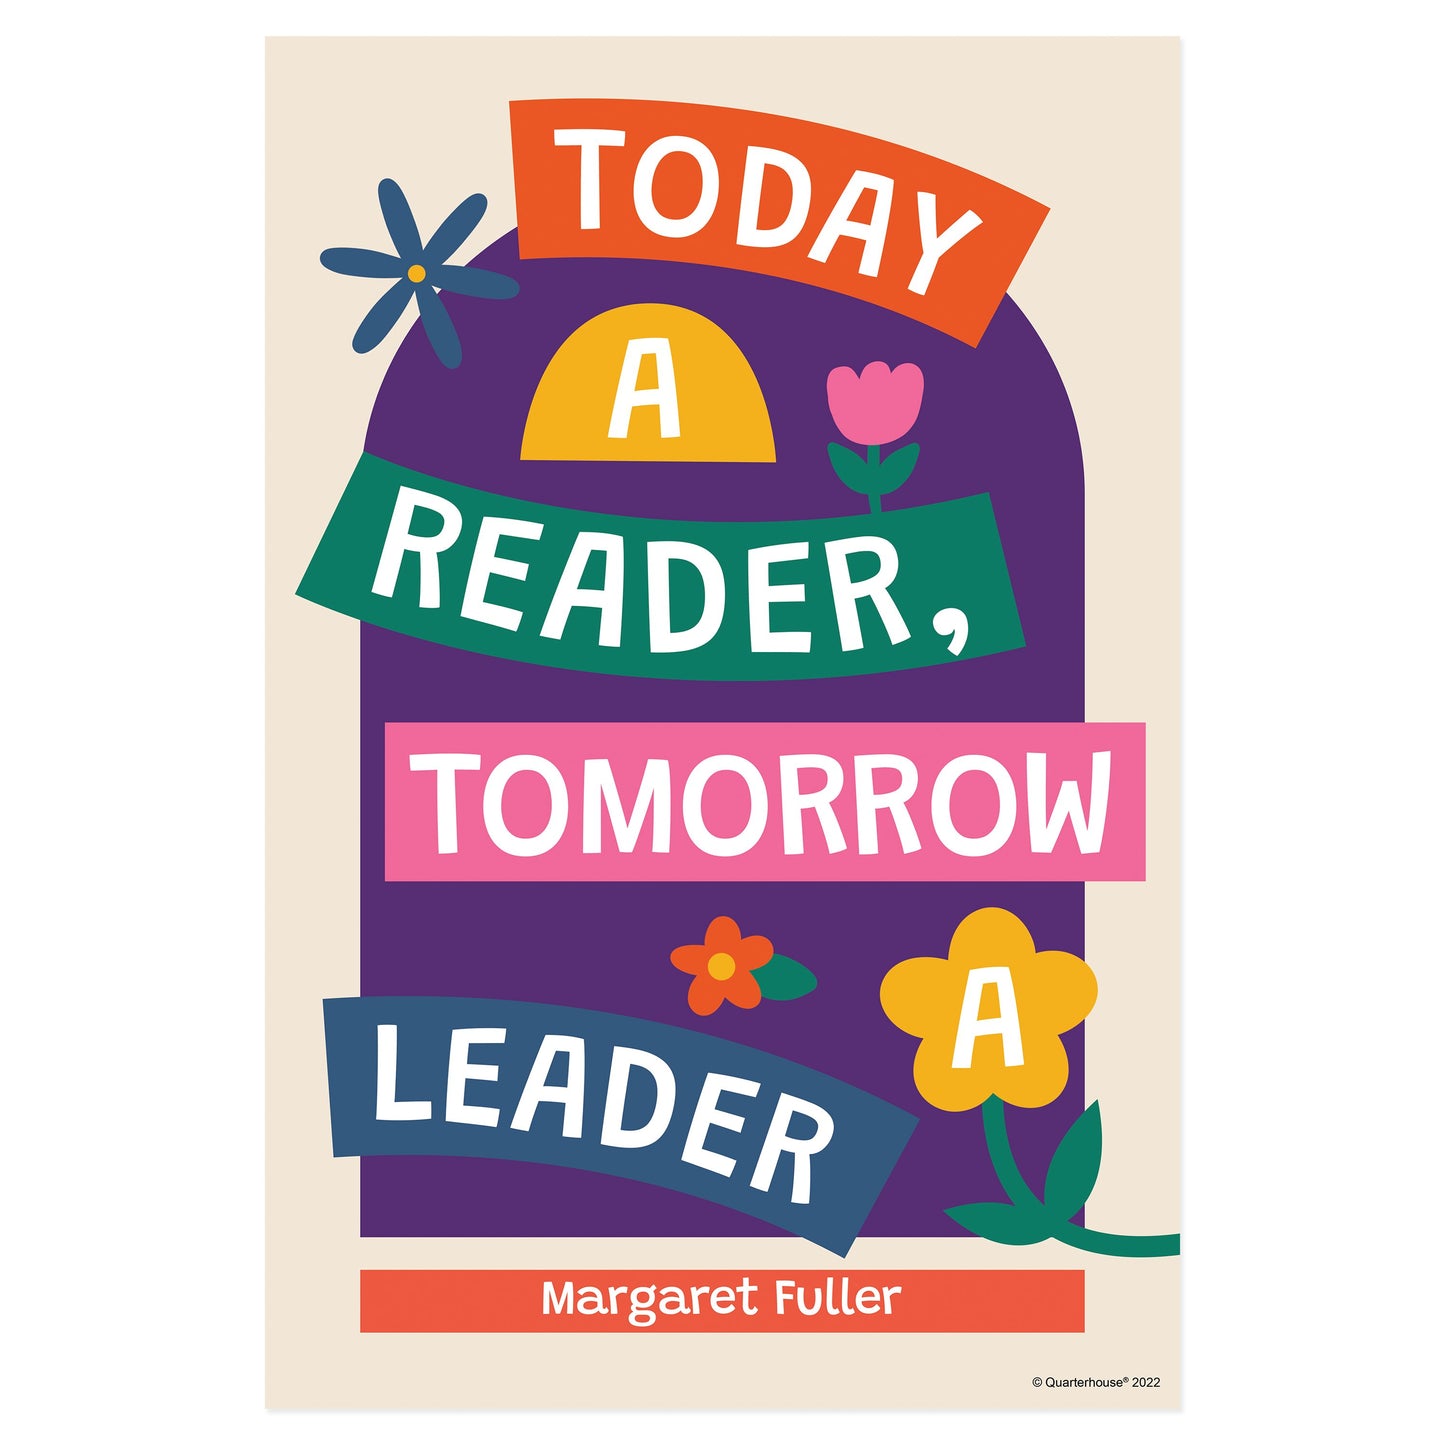 Quarterhouse Reading is Fun Quotes - Margaret Fuller Poster, English-Language Arts Classroom Materials for Teachers